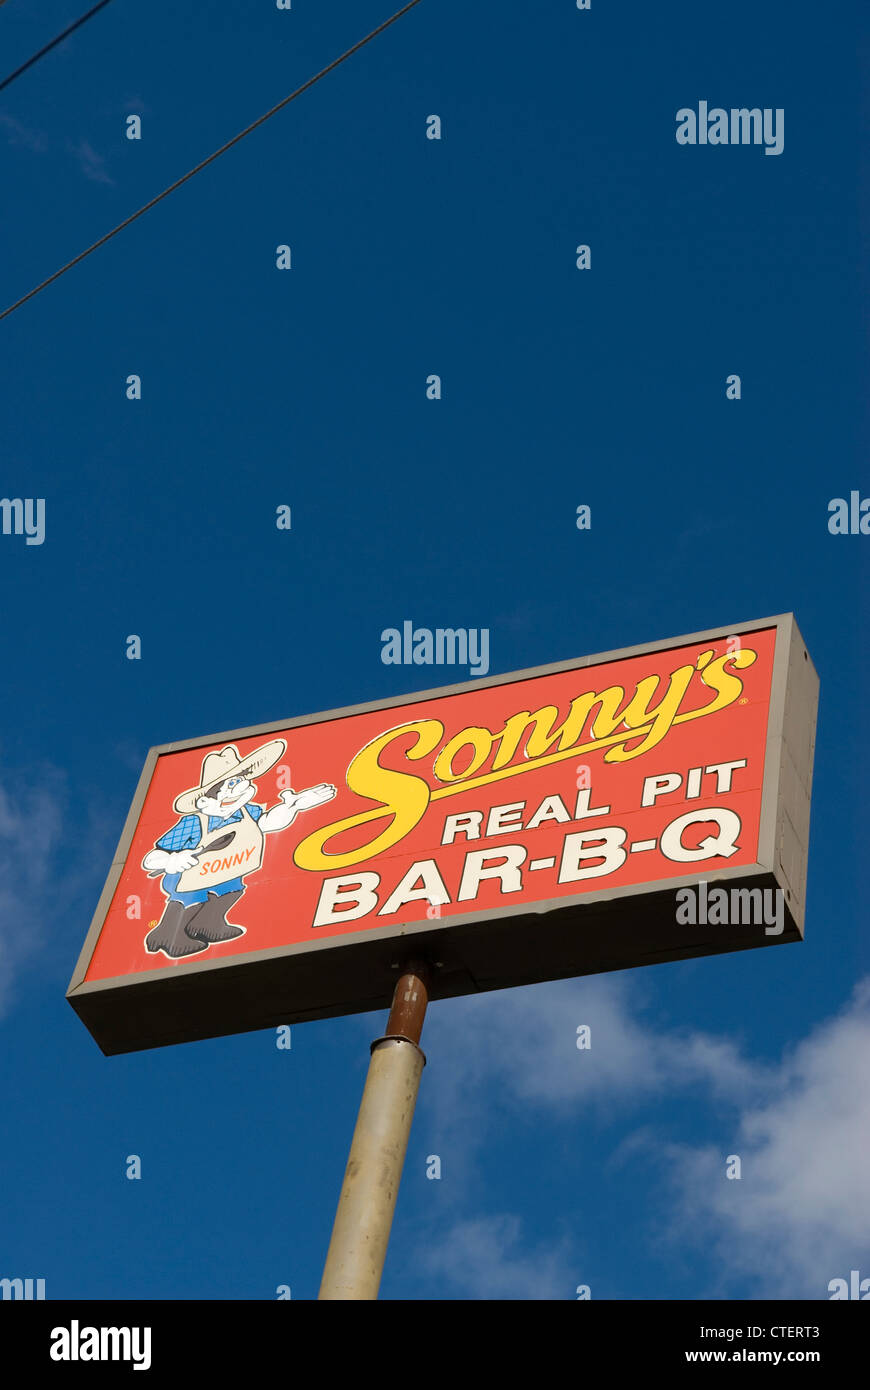 Sonny's Real Pit Bar-B-Q Restaurant Sign USA Stock Photo